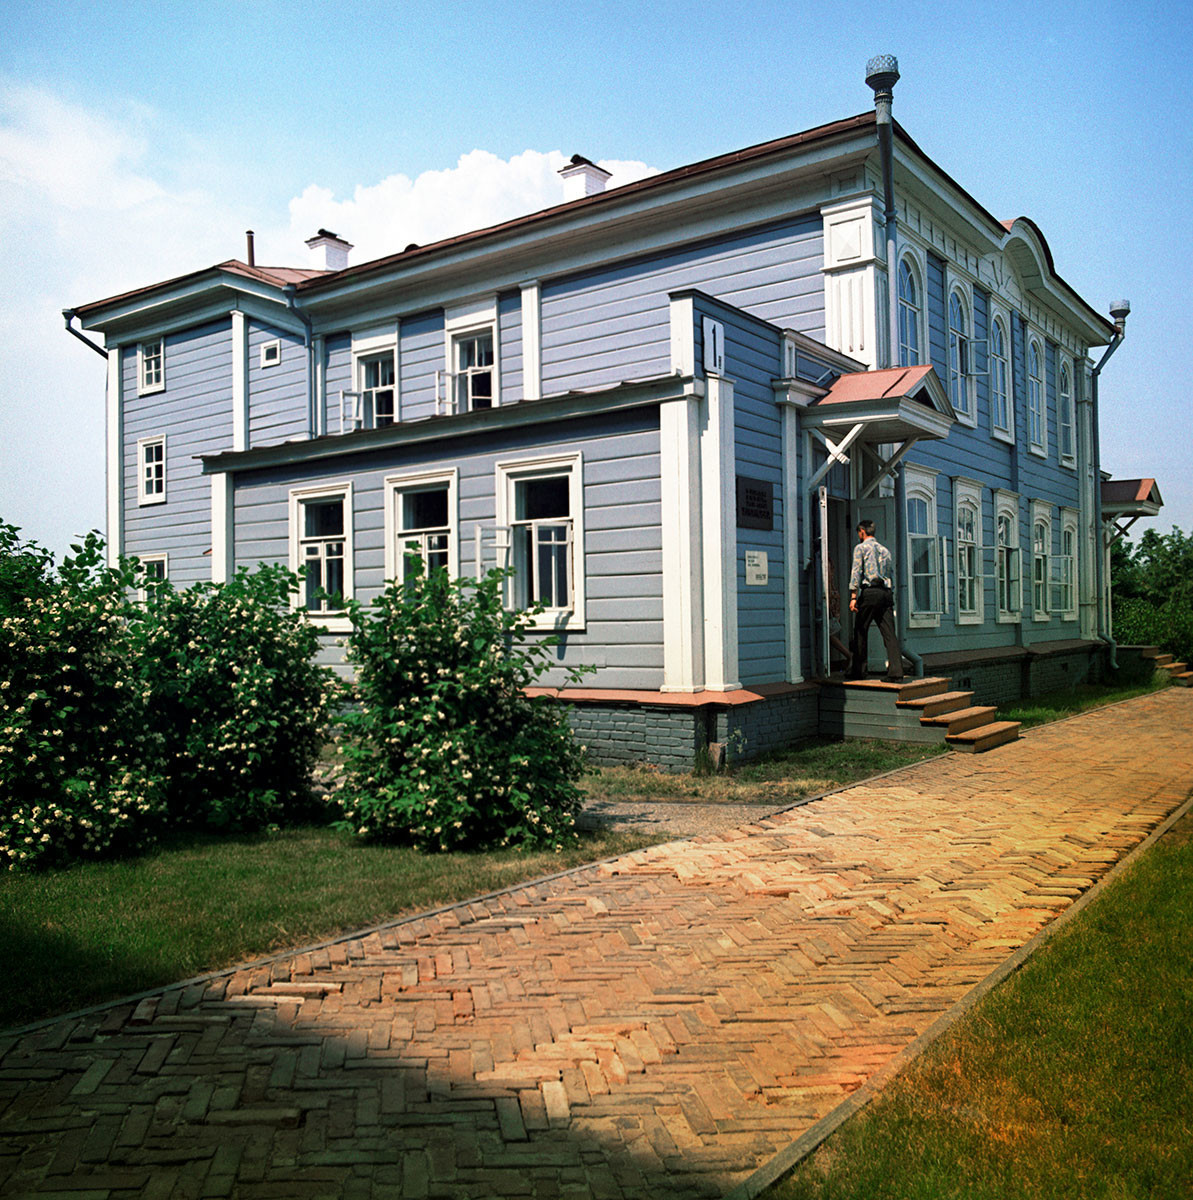 Družinska hiša Uljanovih v Simbirsku (Uljanovsk).
